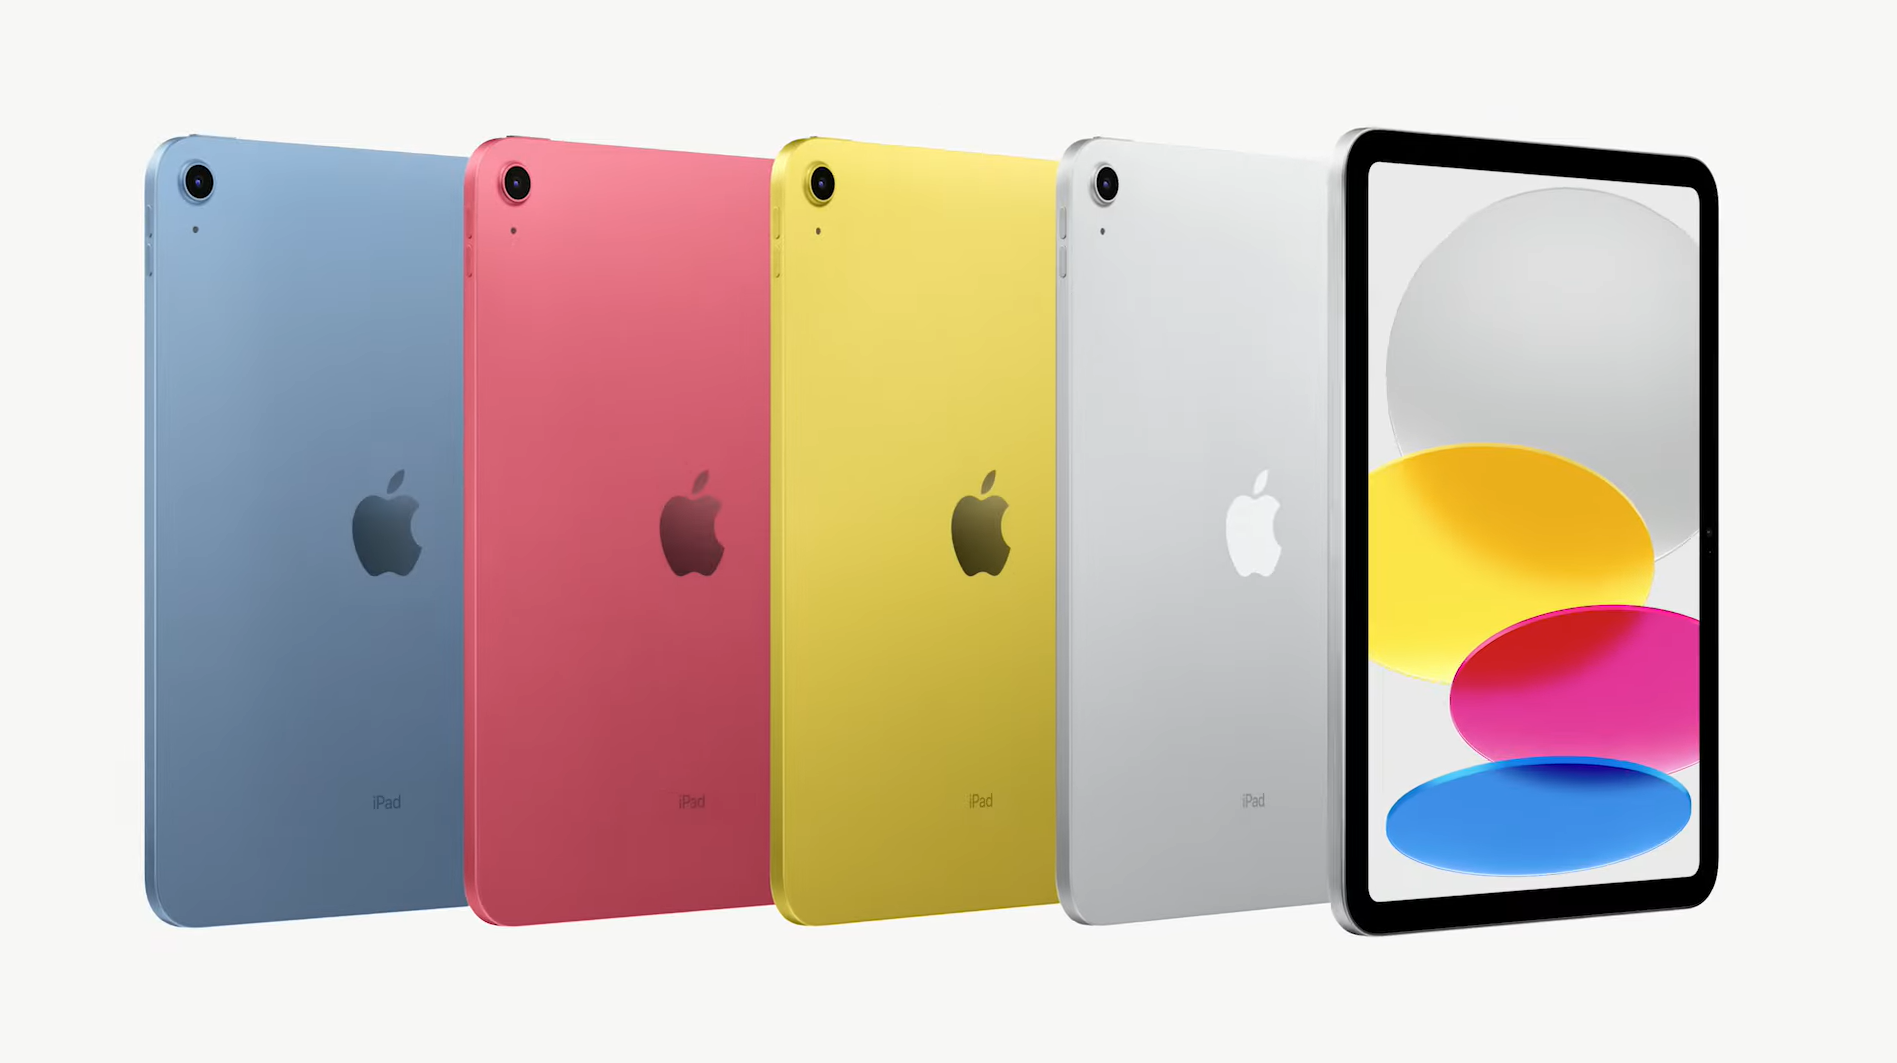 auの新しい「iPad Pro」「iPad」、価格が決定 - ケータイ Watch